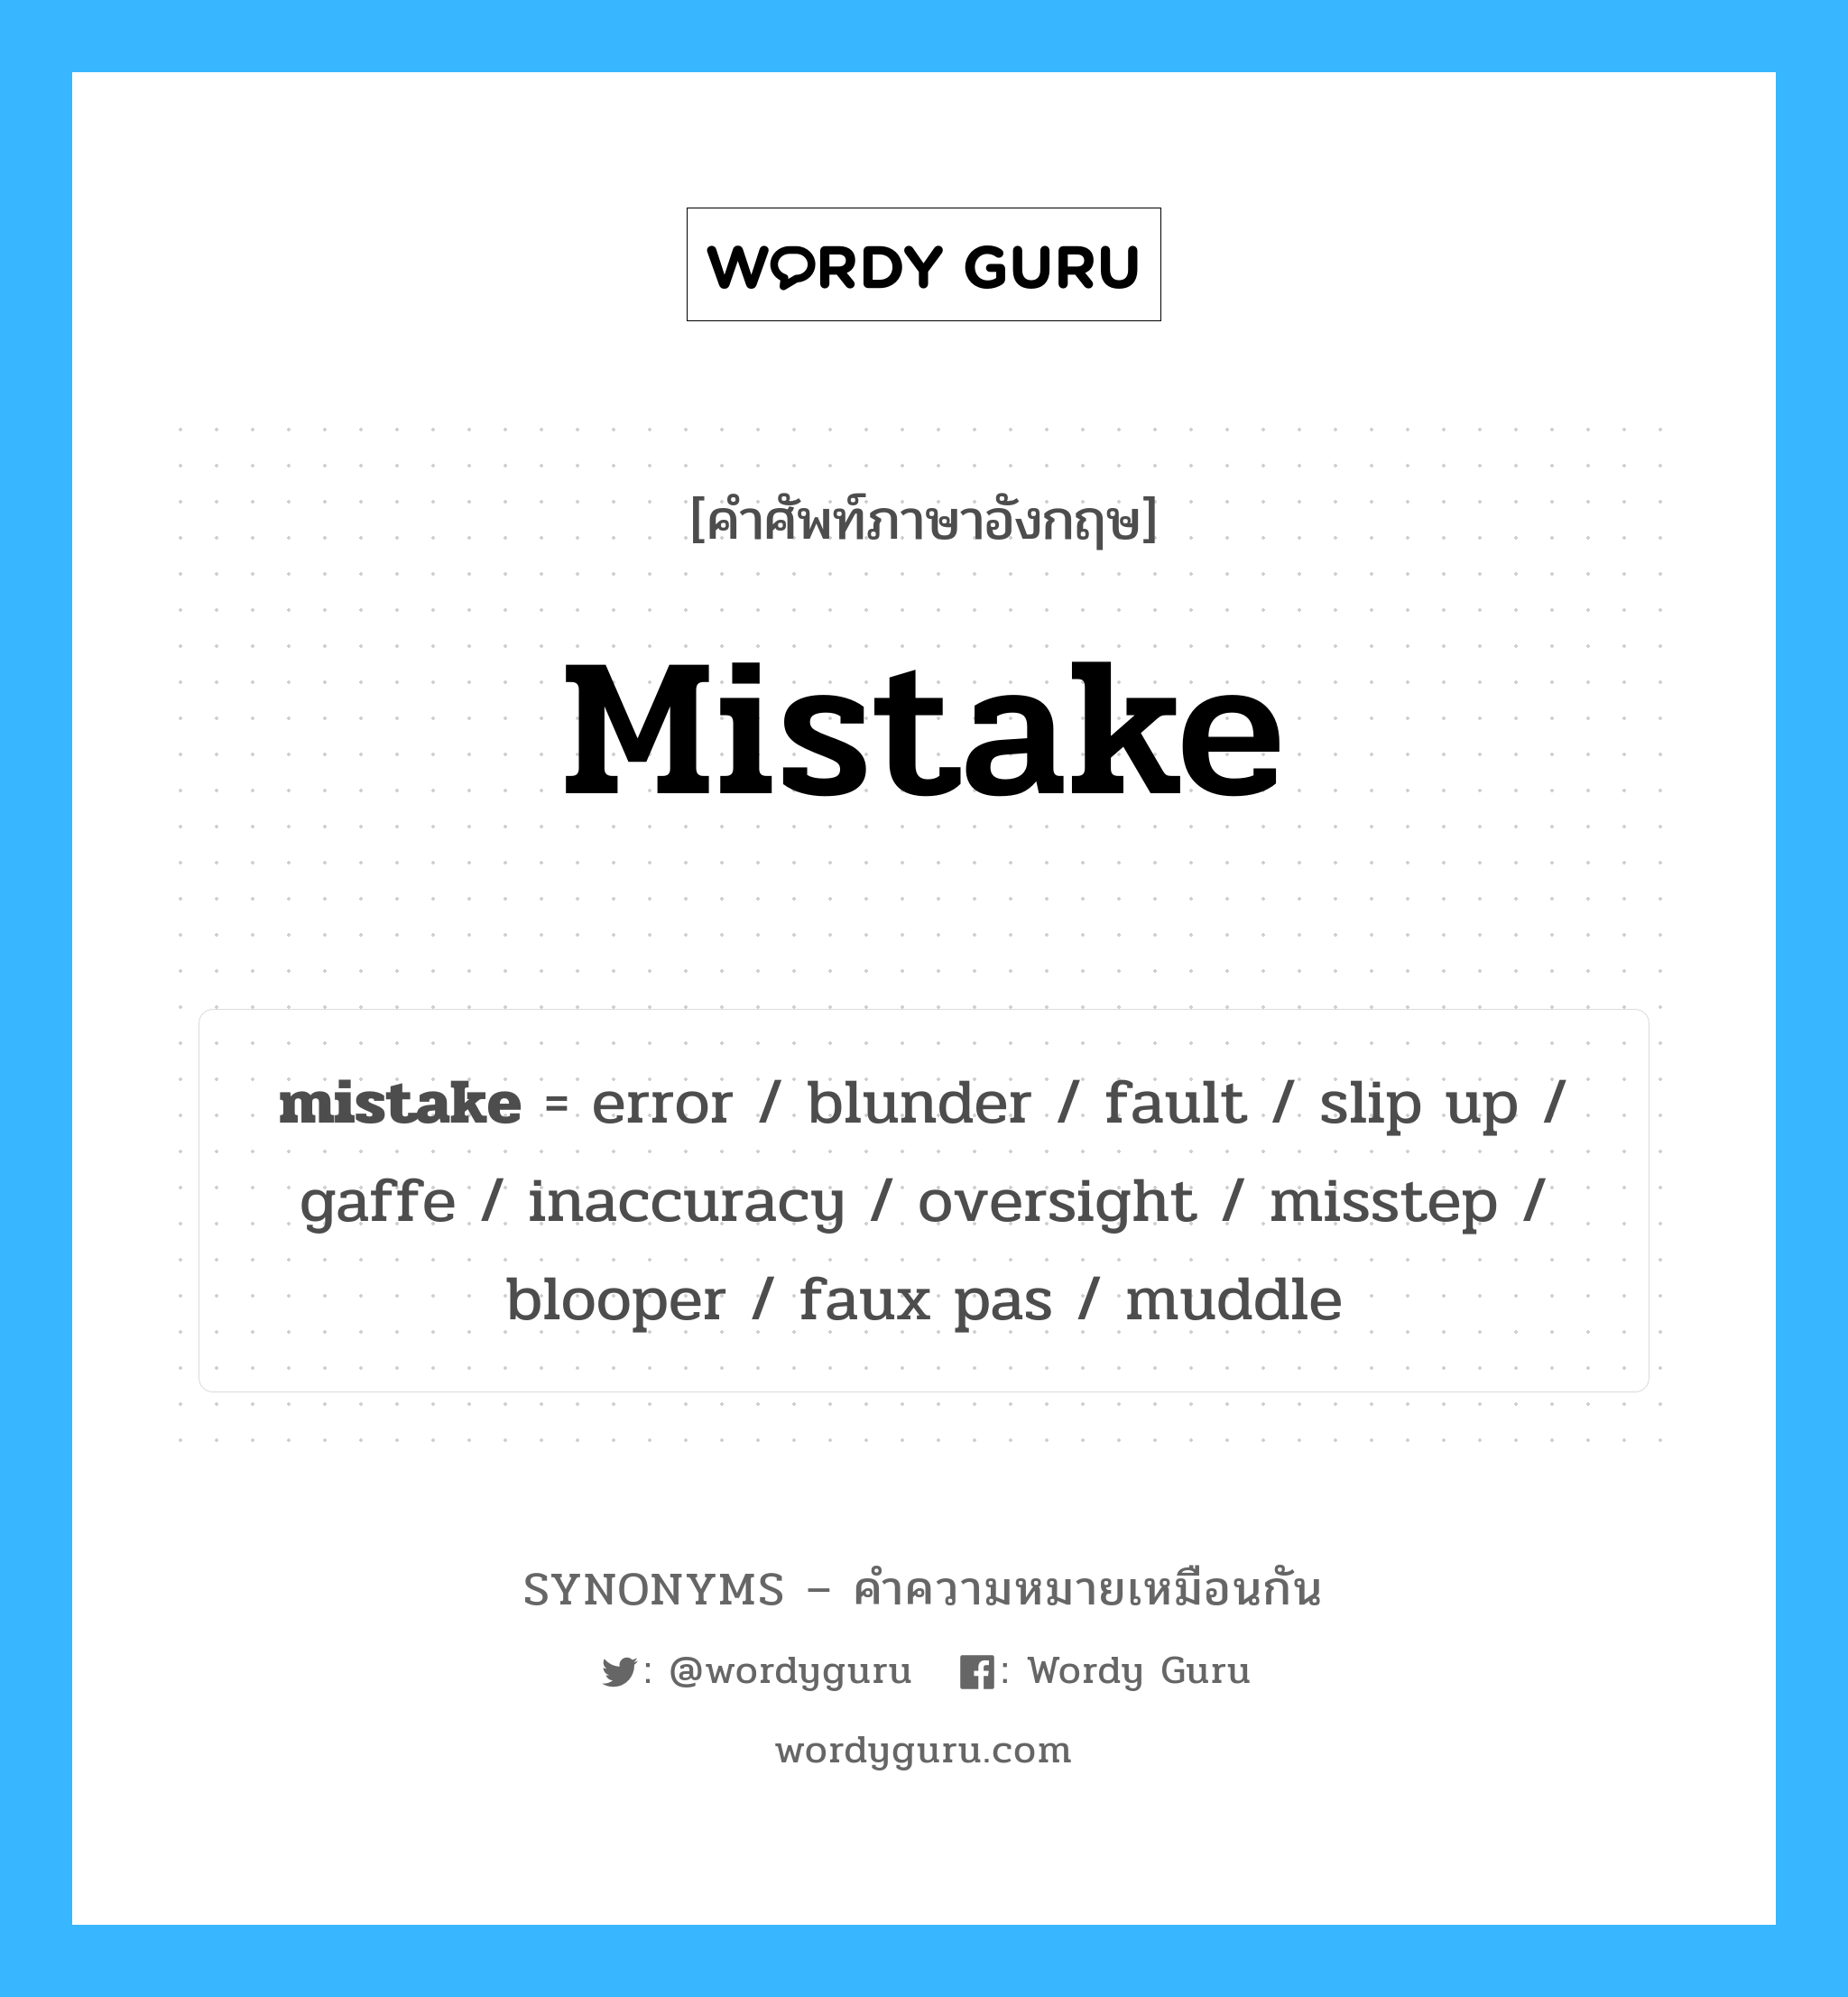 mistake เป็นหนึ่งใน error และมีคำอื่น ๆ อีกดังนี้, คำศัพท์ภาษาอังกฤษ mistake ความหมายคล้ายกันกับ error แปลว่า ข้อผิดพลาด หมวด error